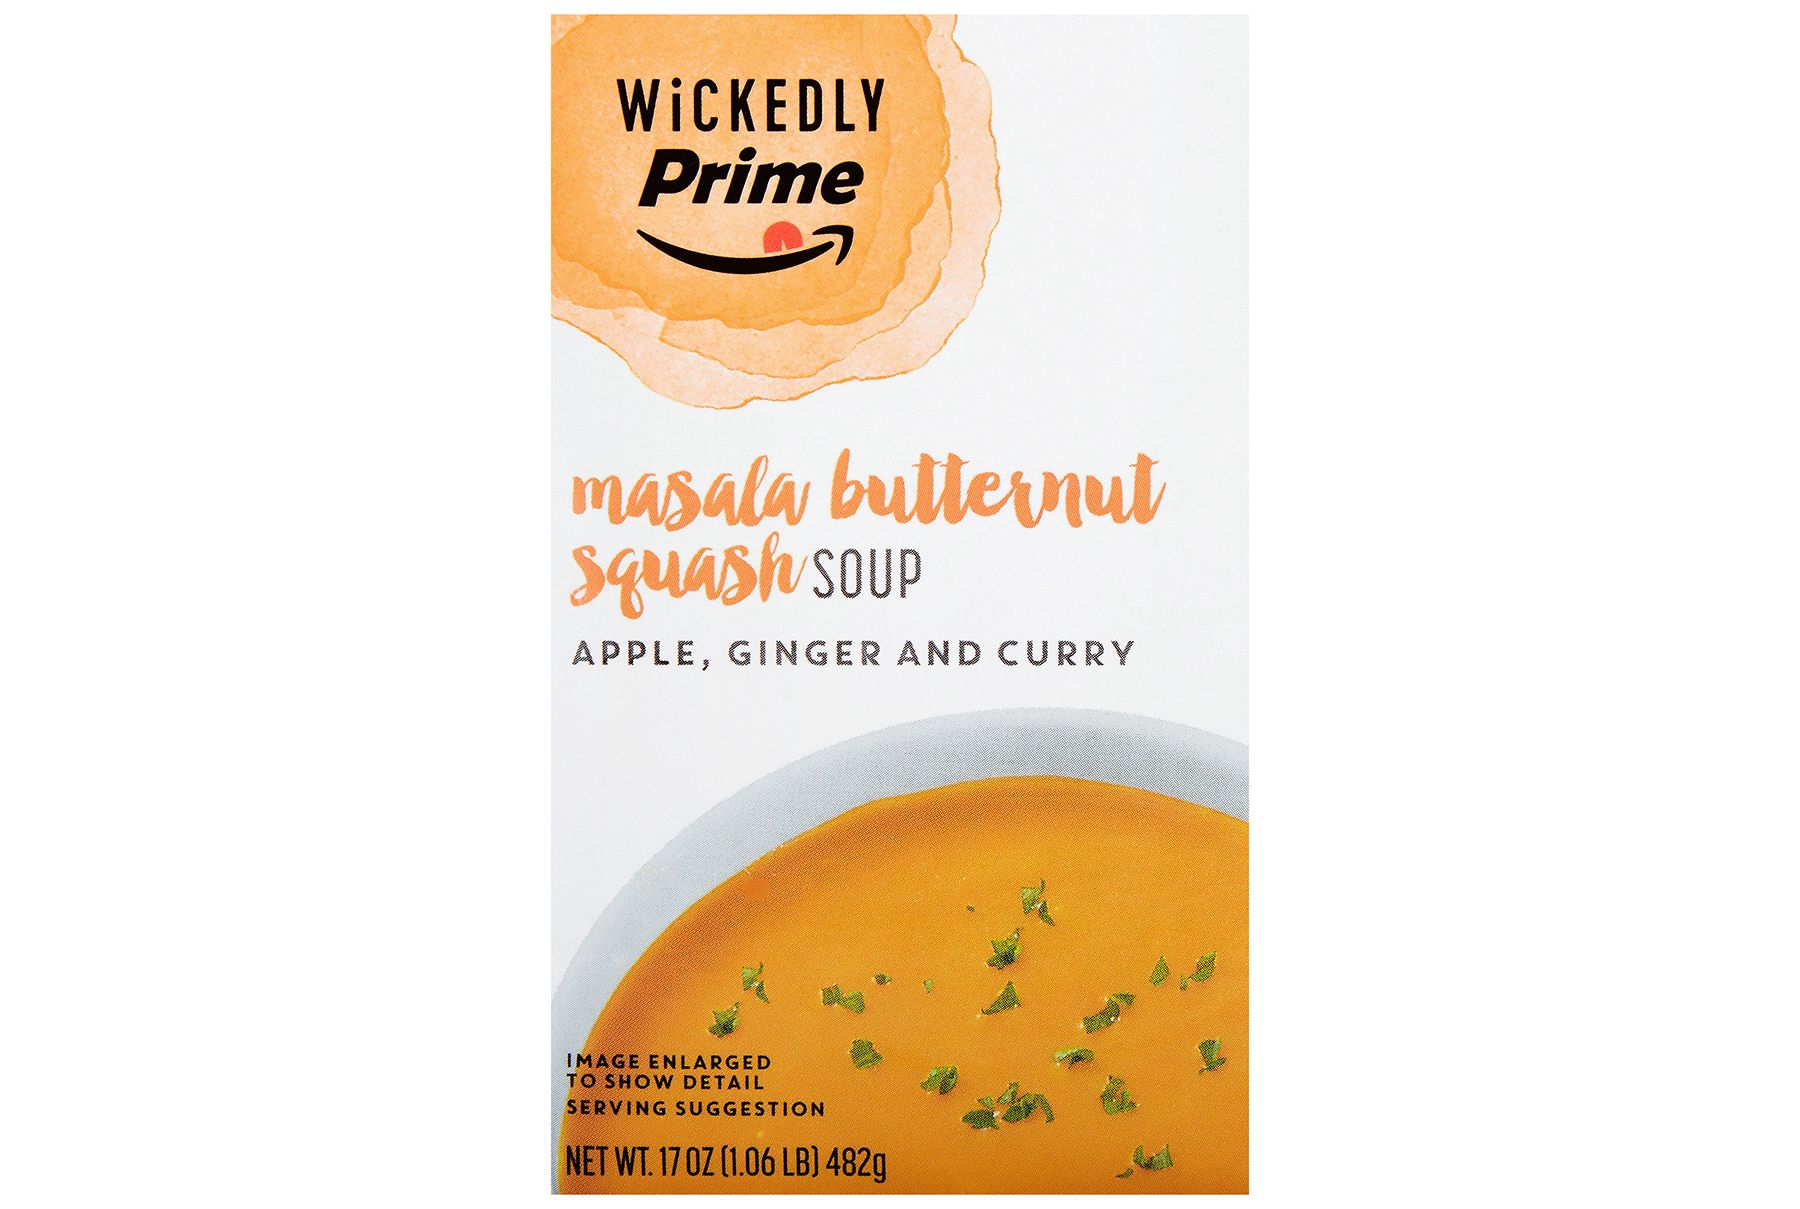 Wickedly Prime Masala Butternut Squash Soup